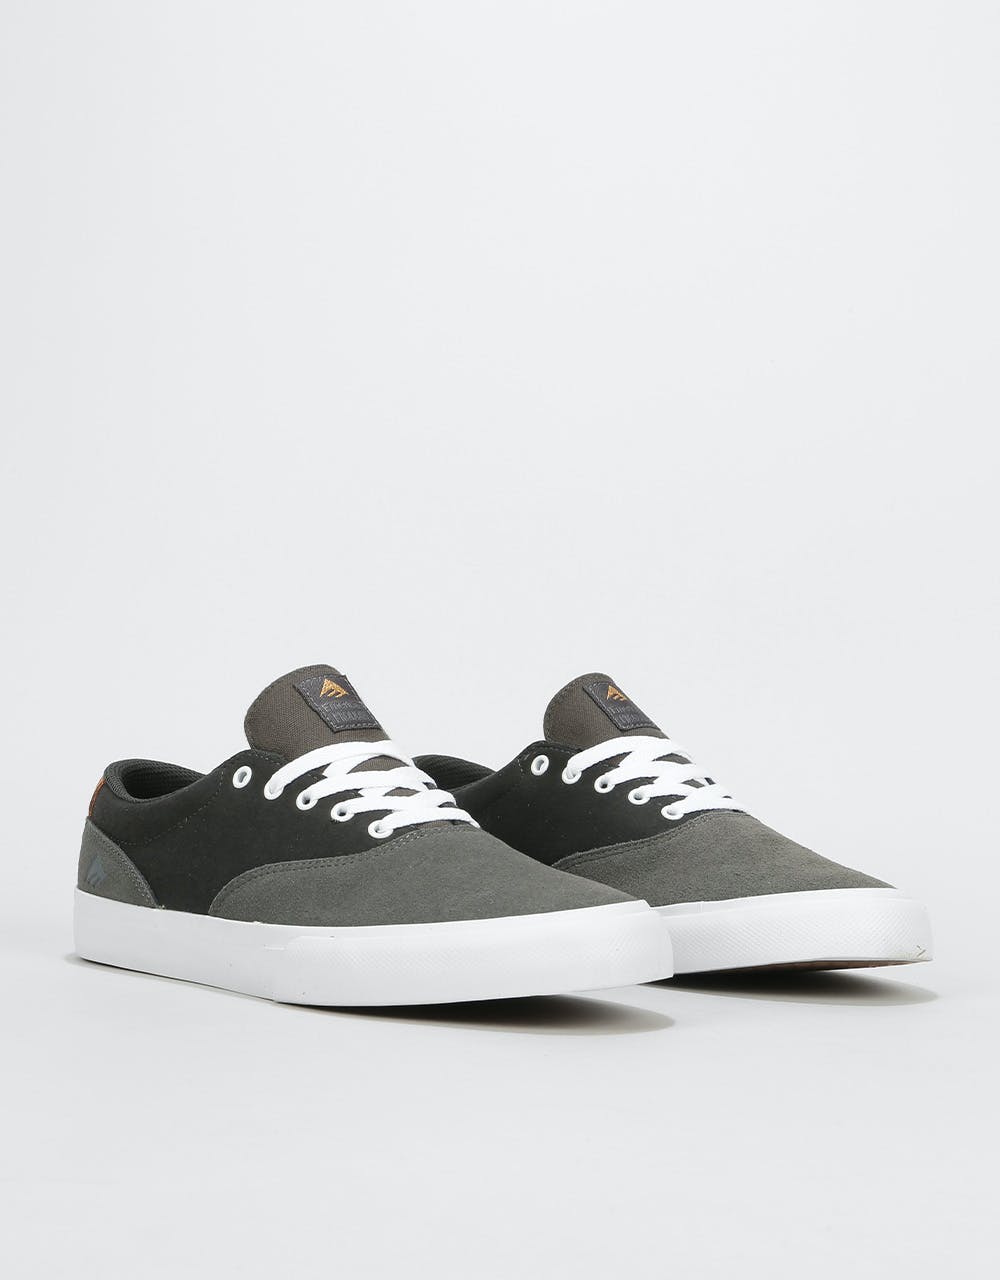 Emerica Provost Slim Vulc Skate Shoes - Grey/Dark Grey/Gold